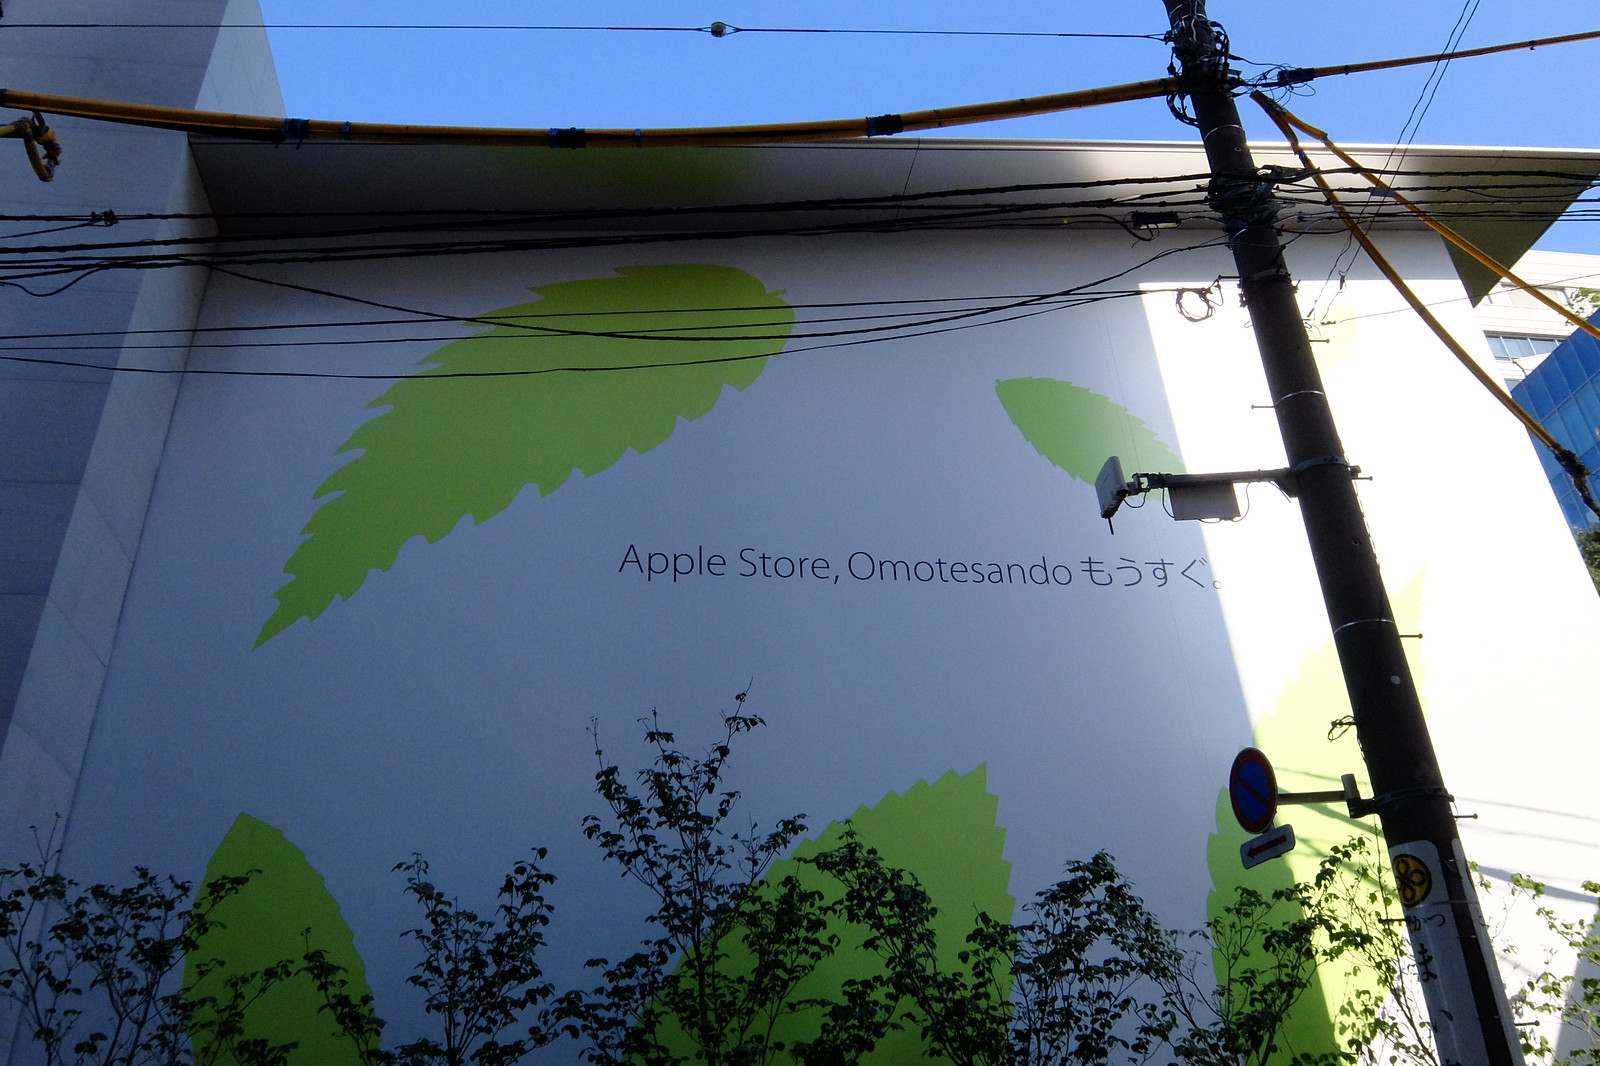 Apple Store, Omotesando